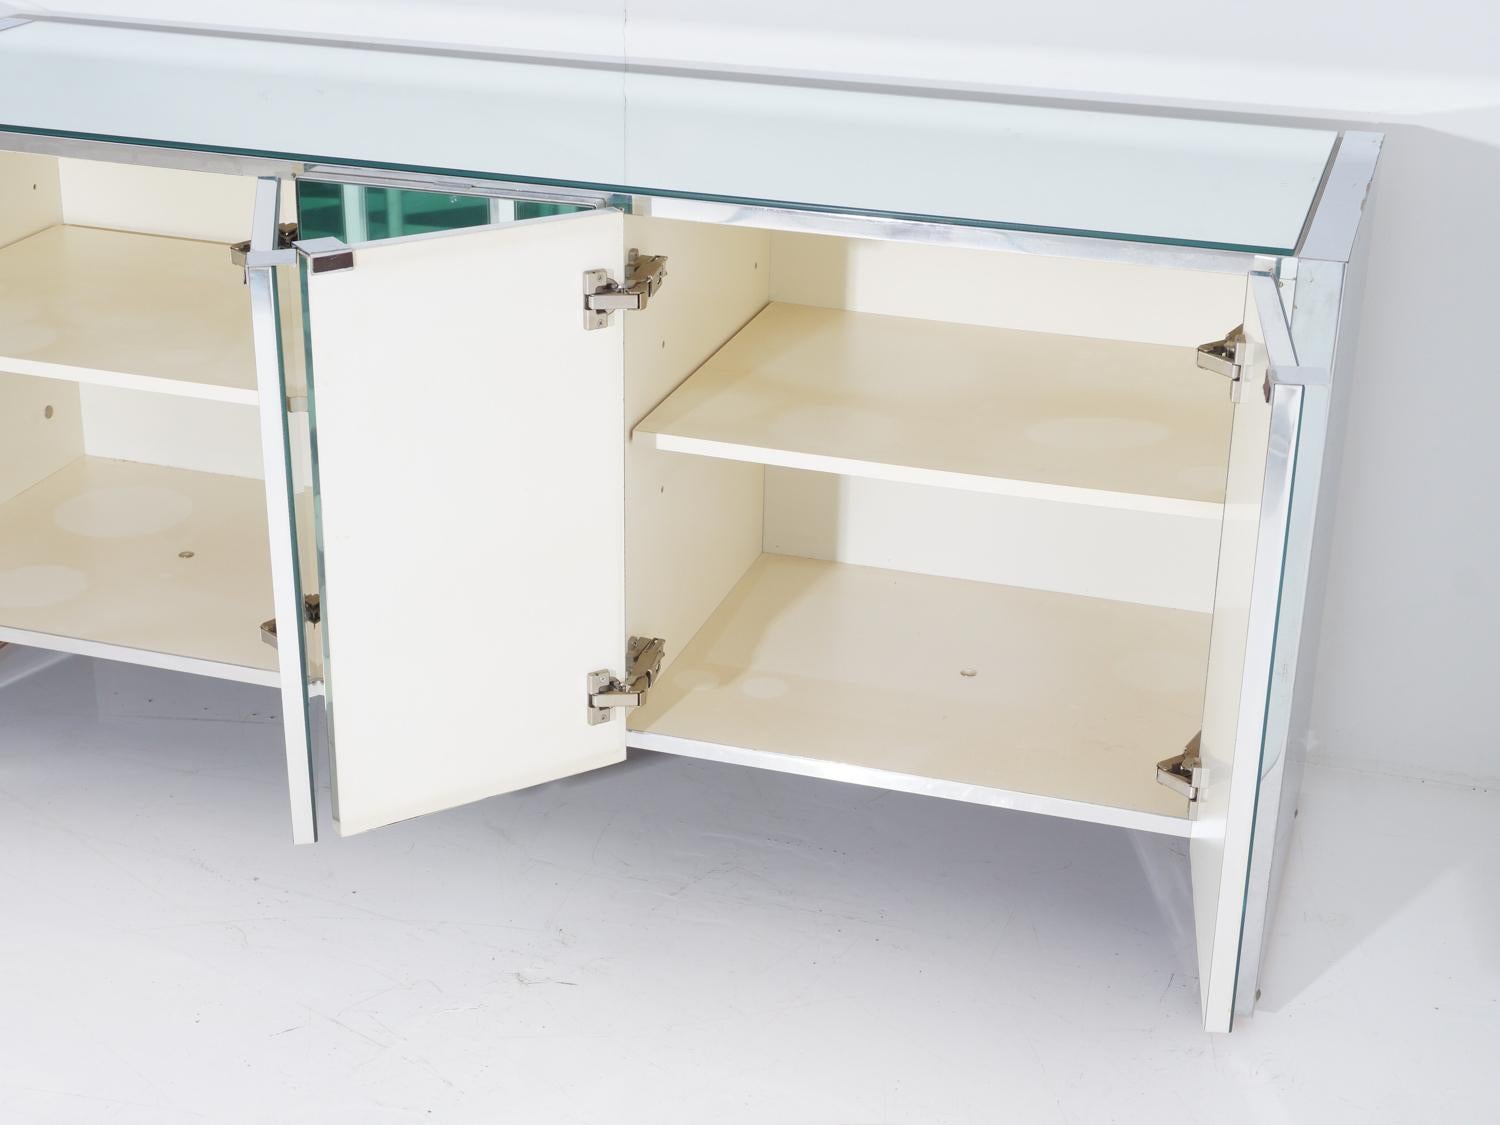 Late 20th Century Mirrored Cabinet By Ello Furniture Company, 1970s